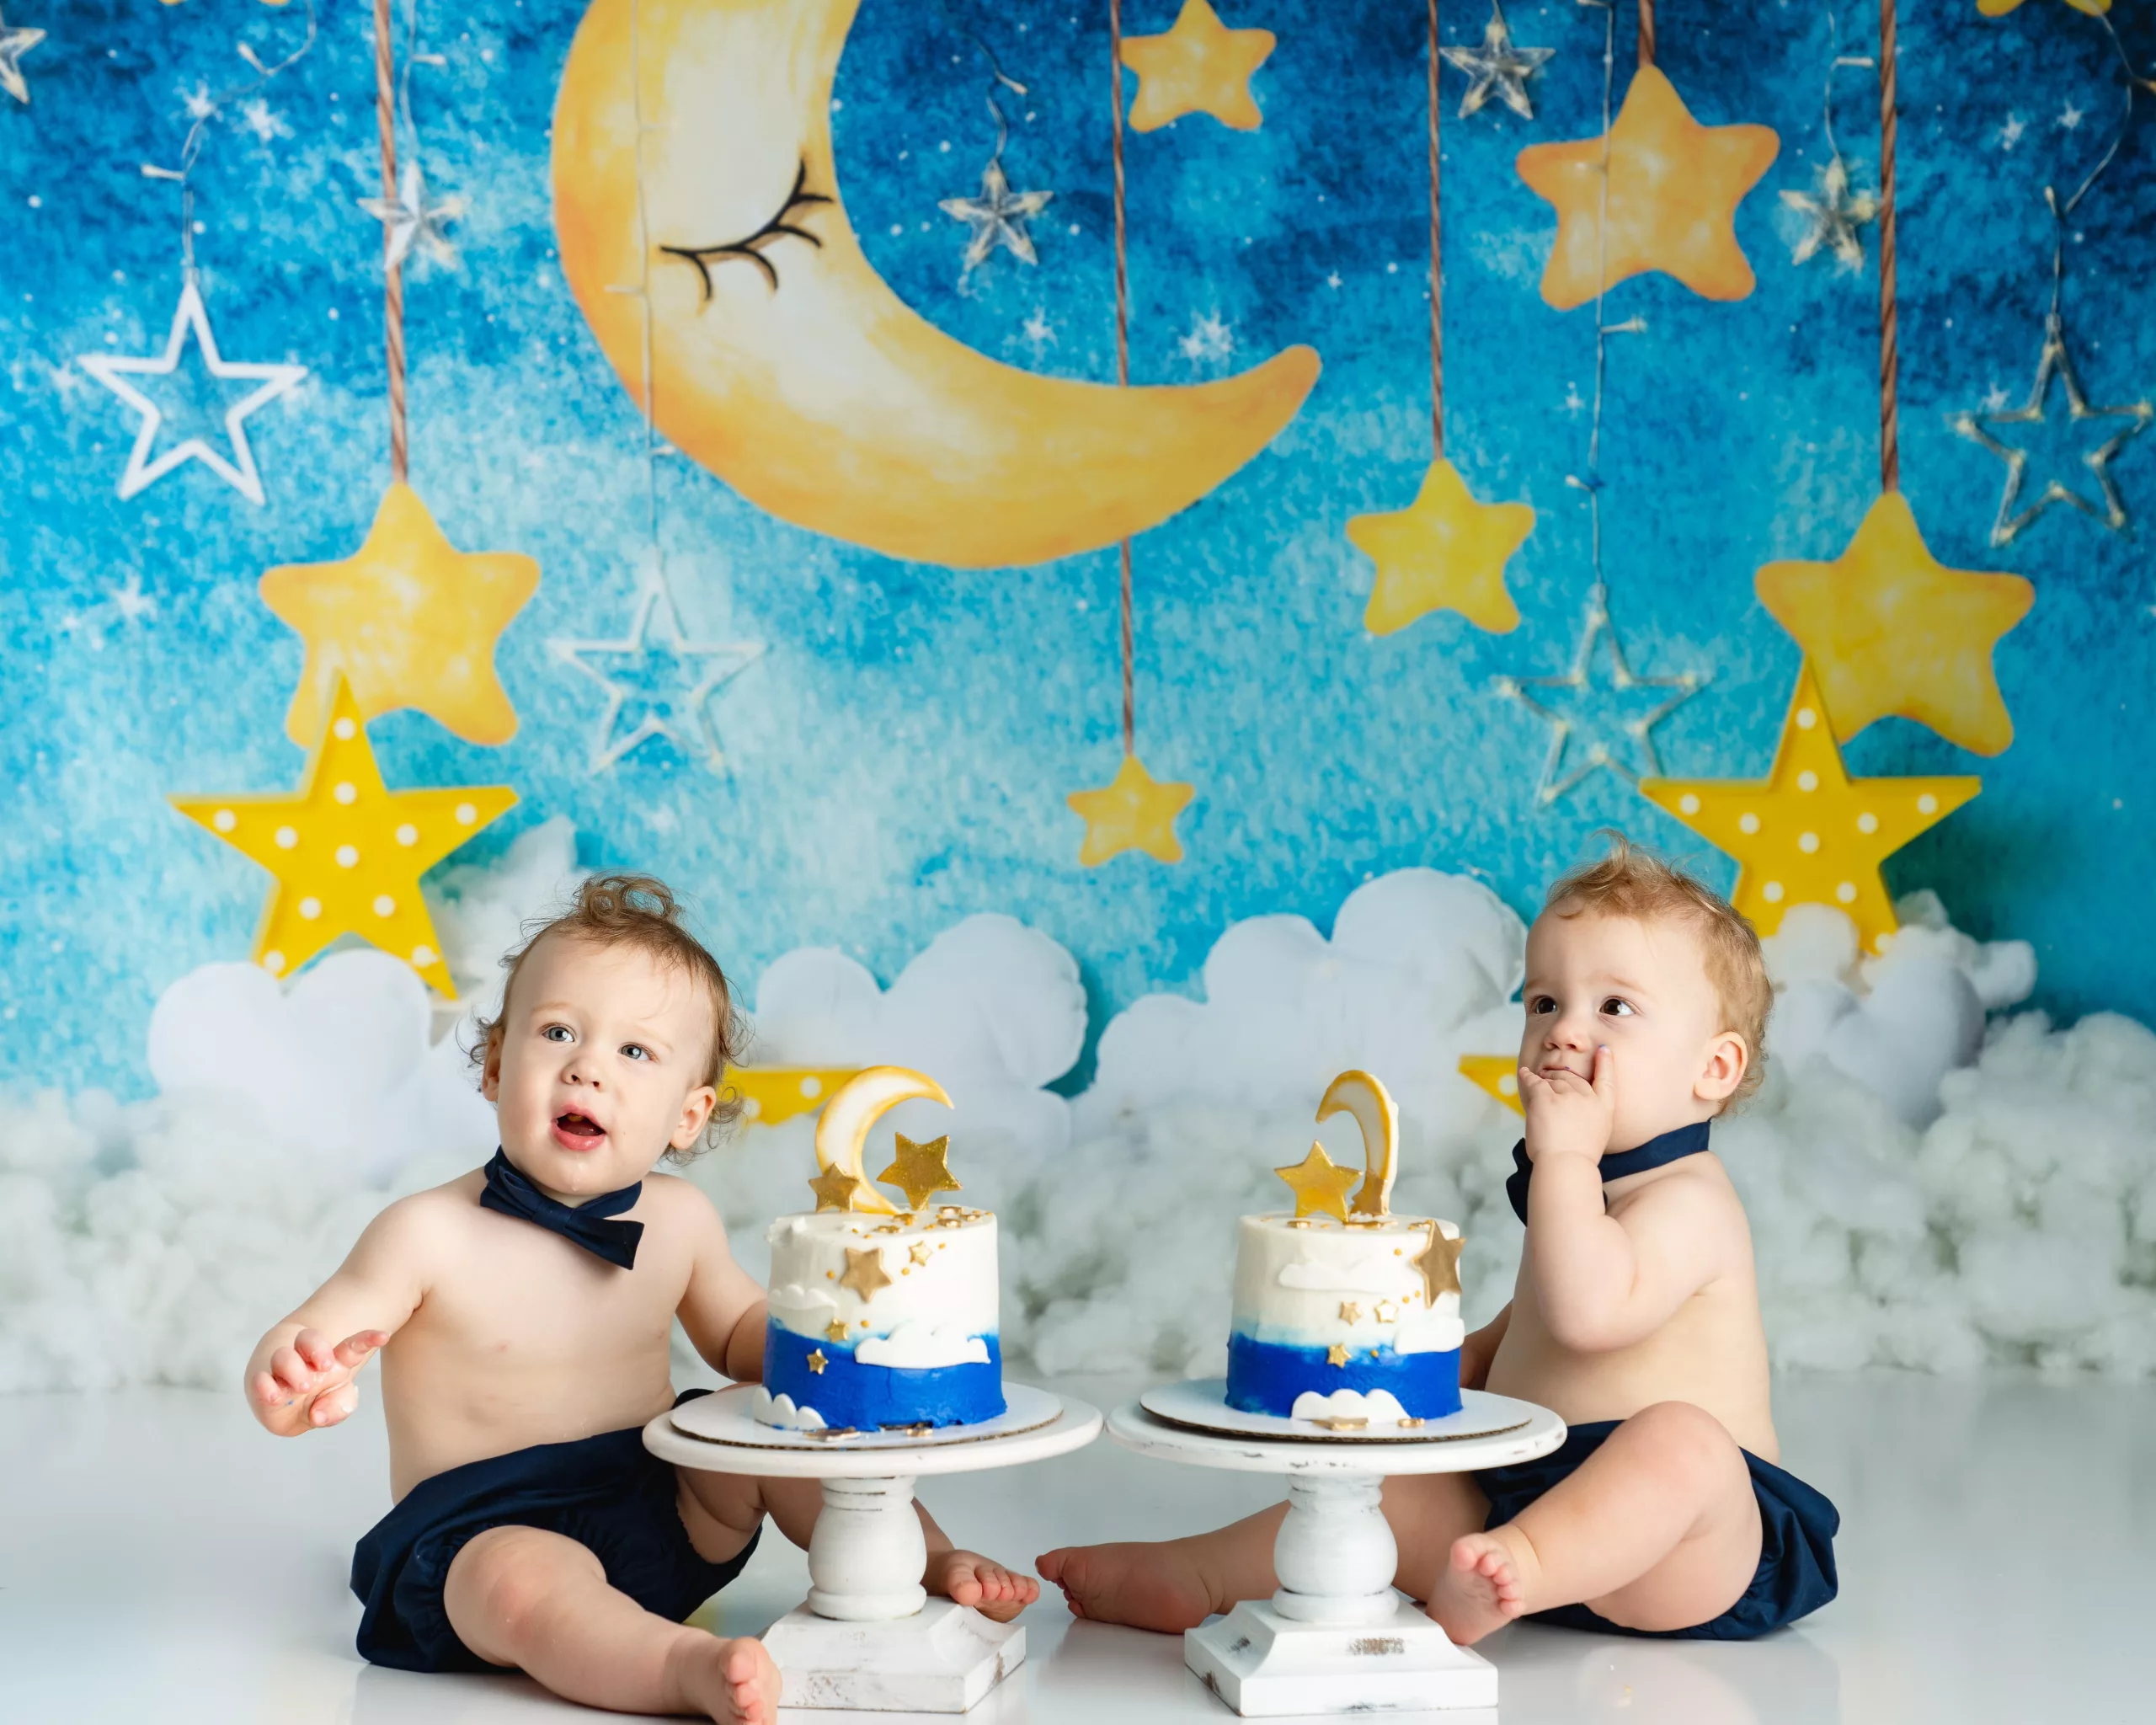 Orlando Boy Cake Smash 1st Birthday Photographer Photo Studio lullaby background sleeping moon with star sand clouds twin cake smash night night theme bowties